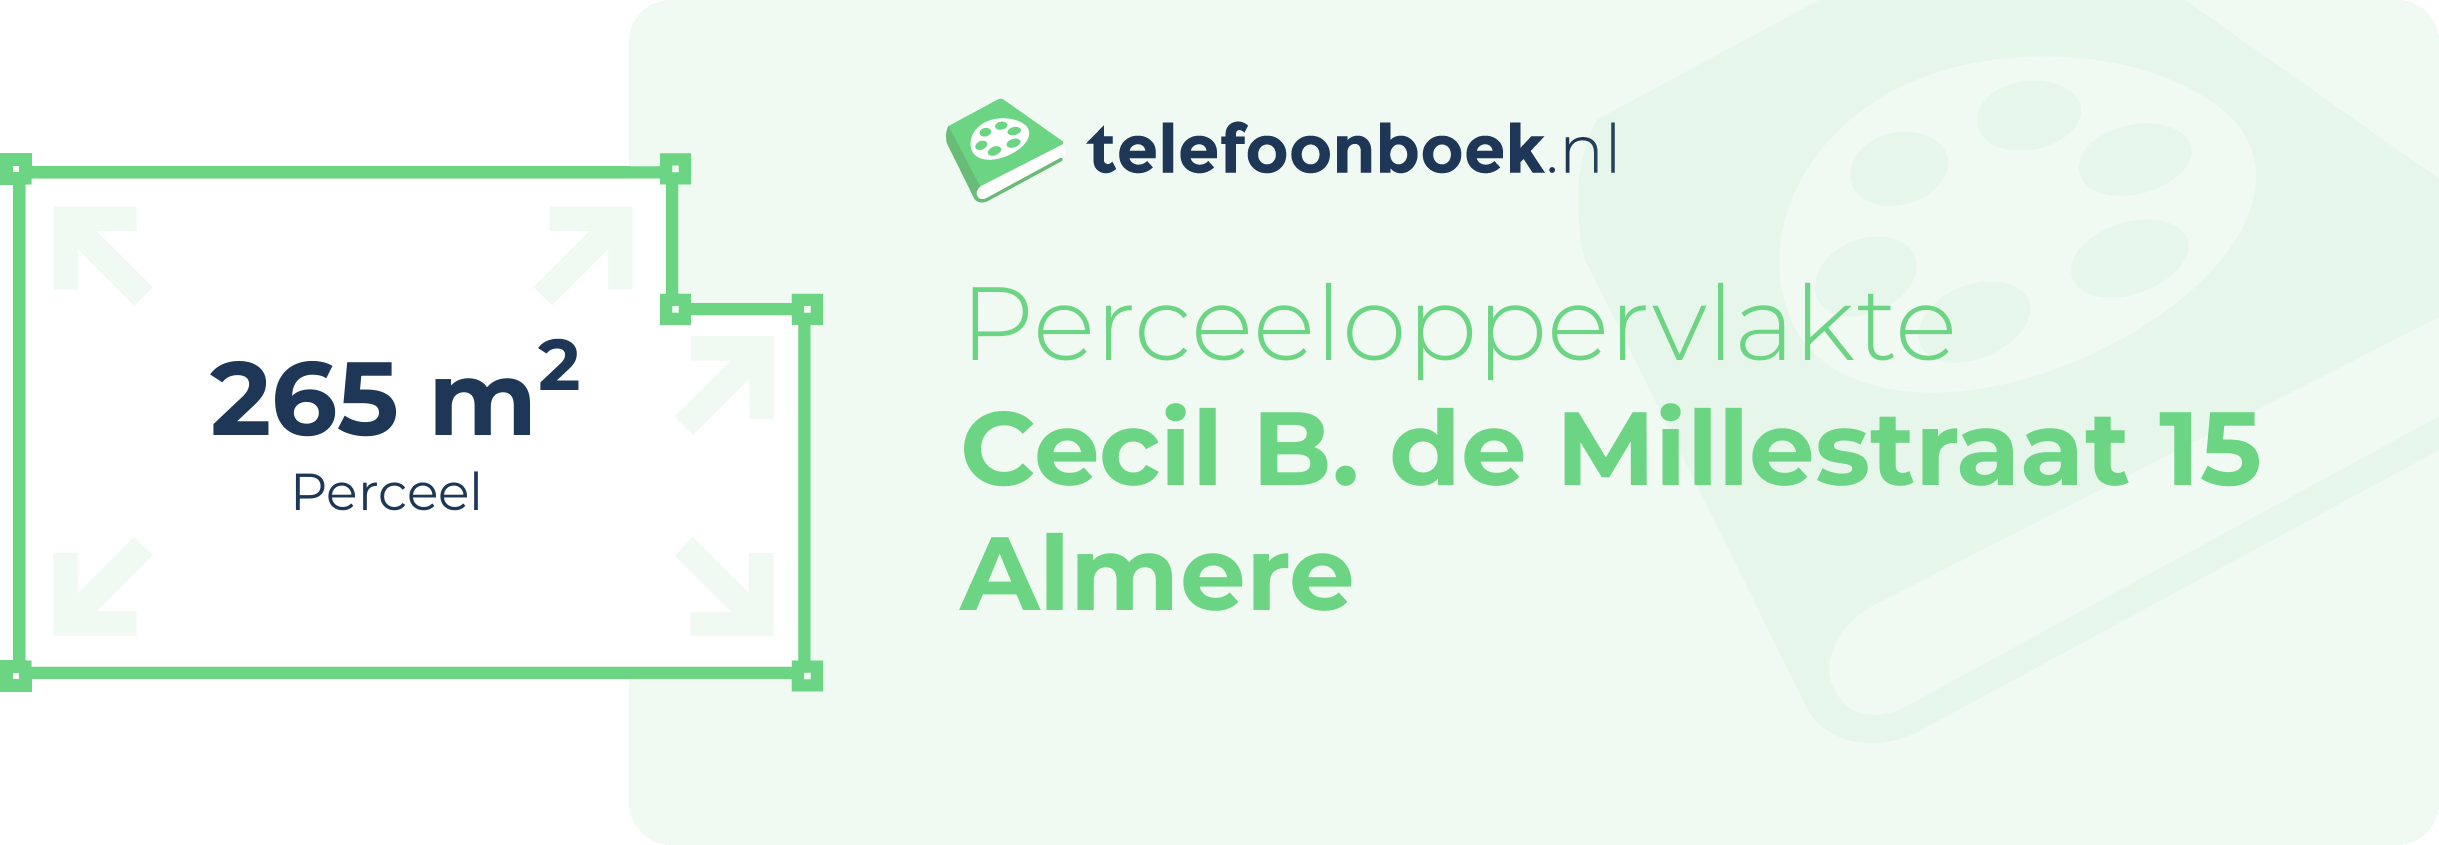 Perceeloppervlakte Cecil B. De Millestraat 15 Almere